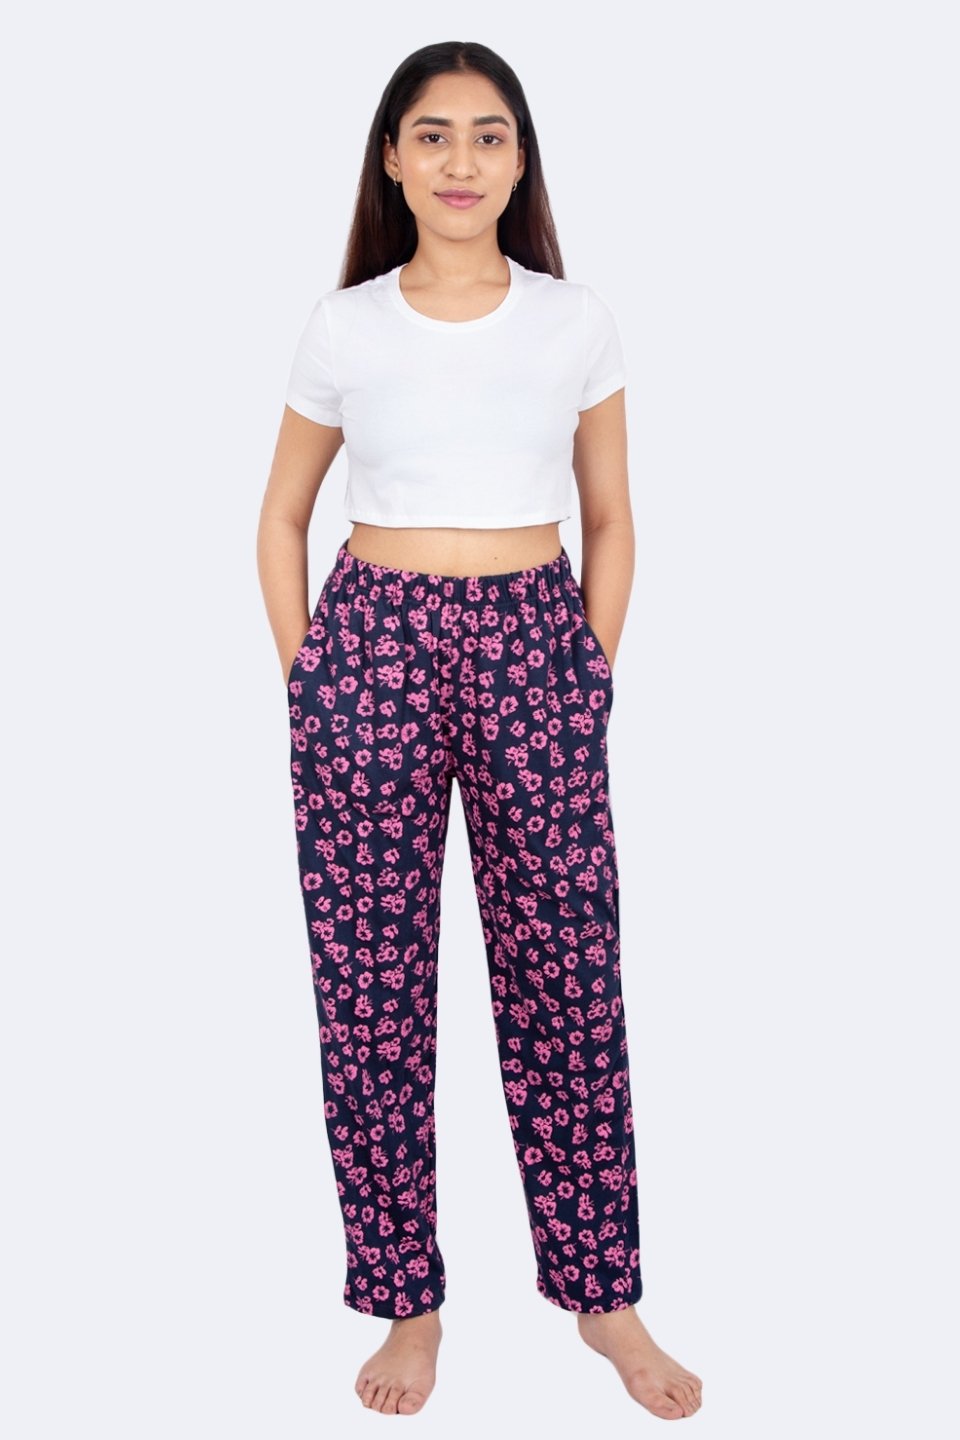 Navy Blue & Pink Floral Print Pyjama